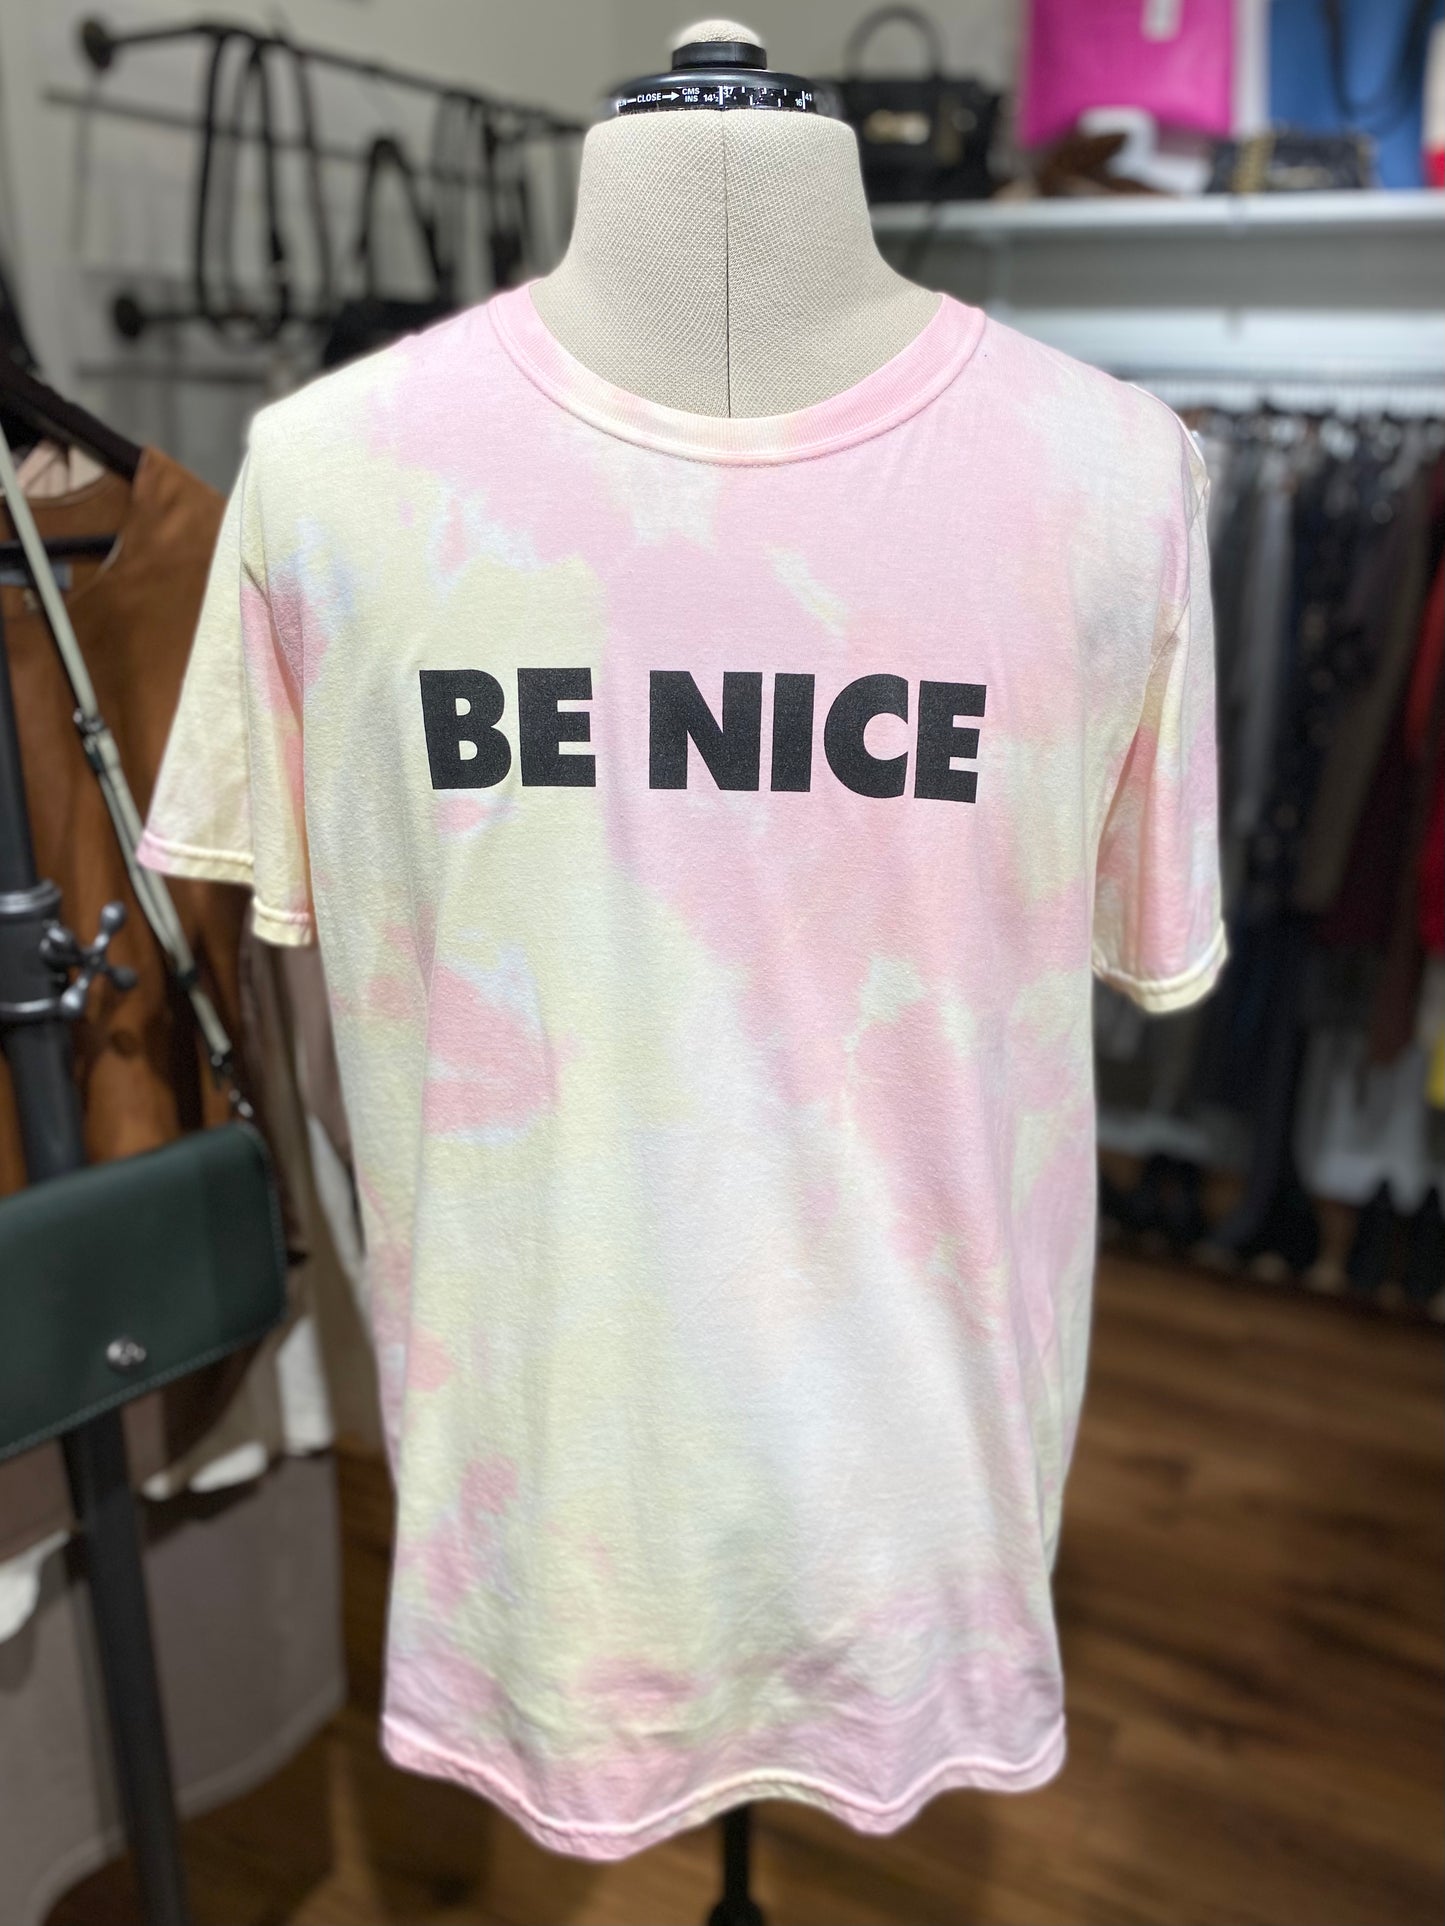 NVR OVR “BE NICE” Tie Dye Shirt